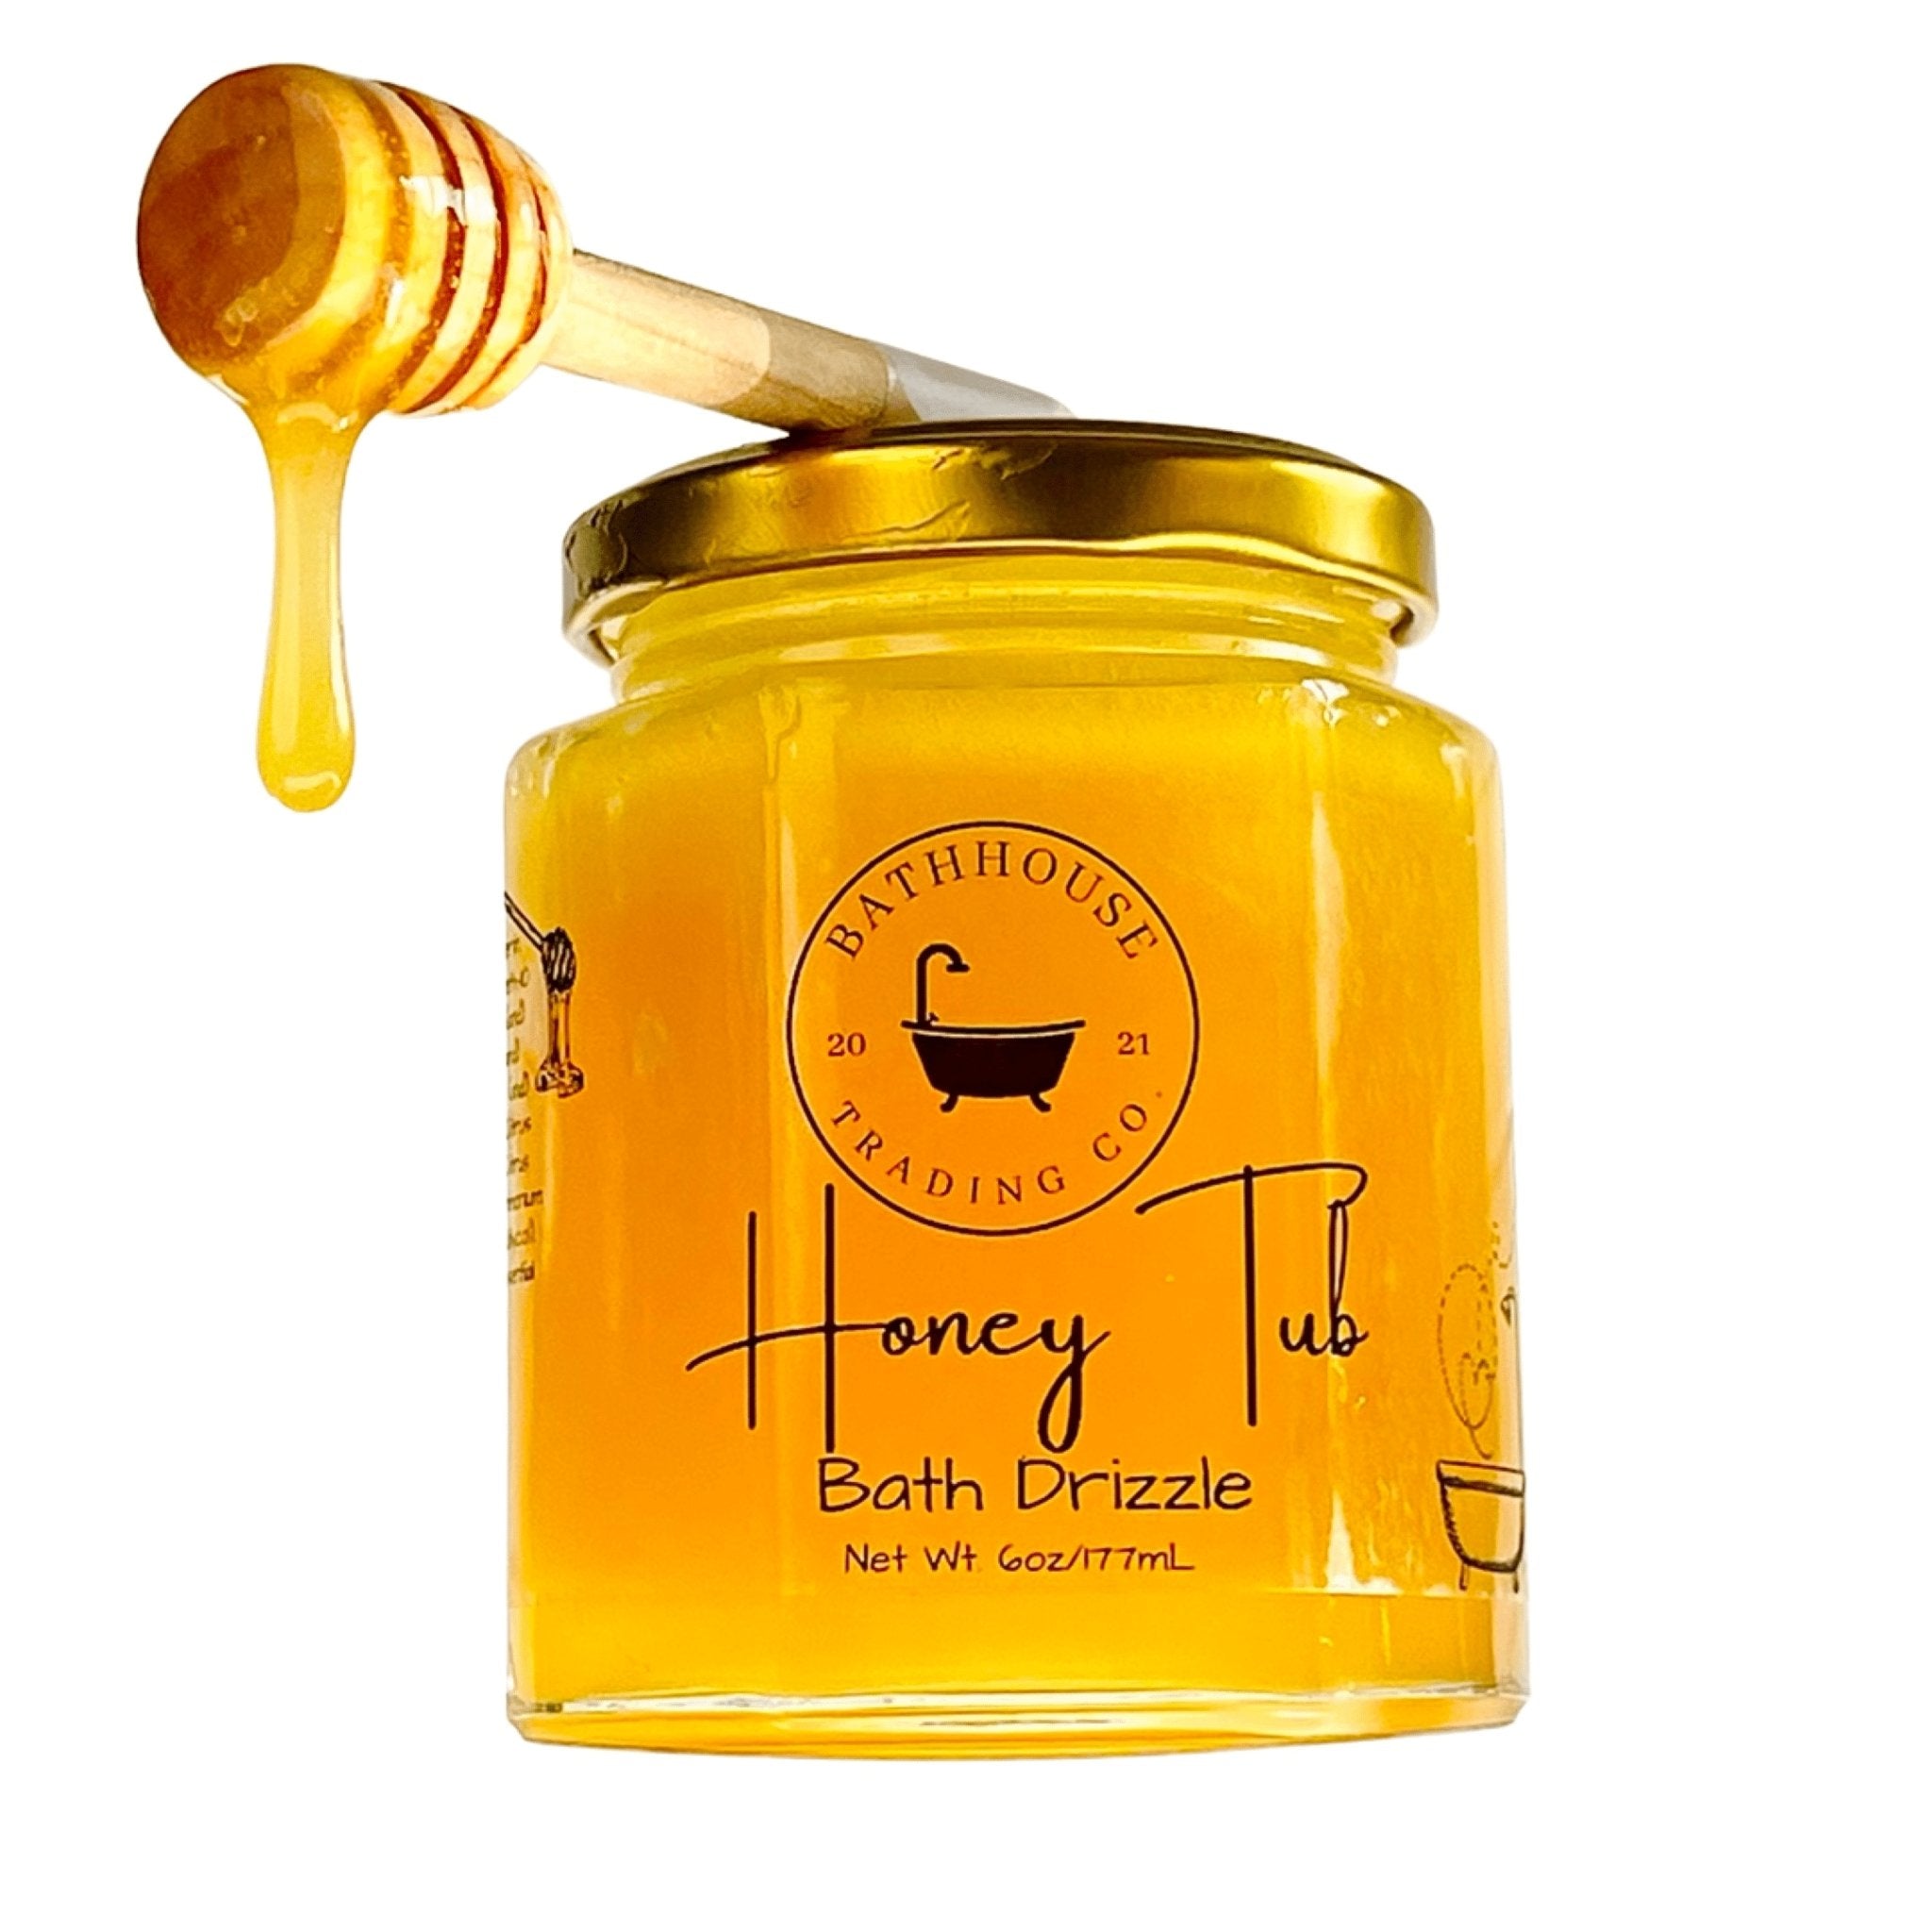 Honey Tub Bath Drizzle - Bathhouse Trading Company